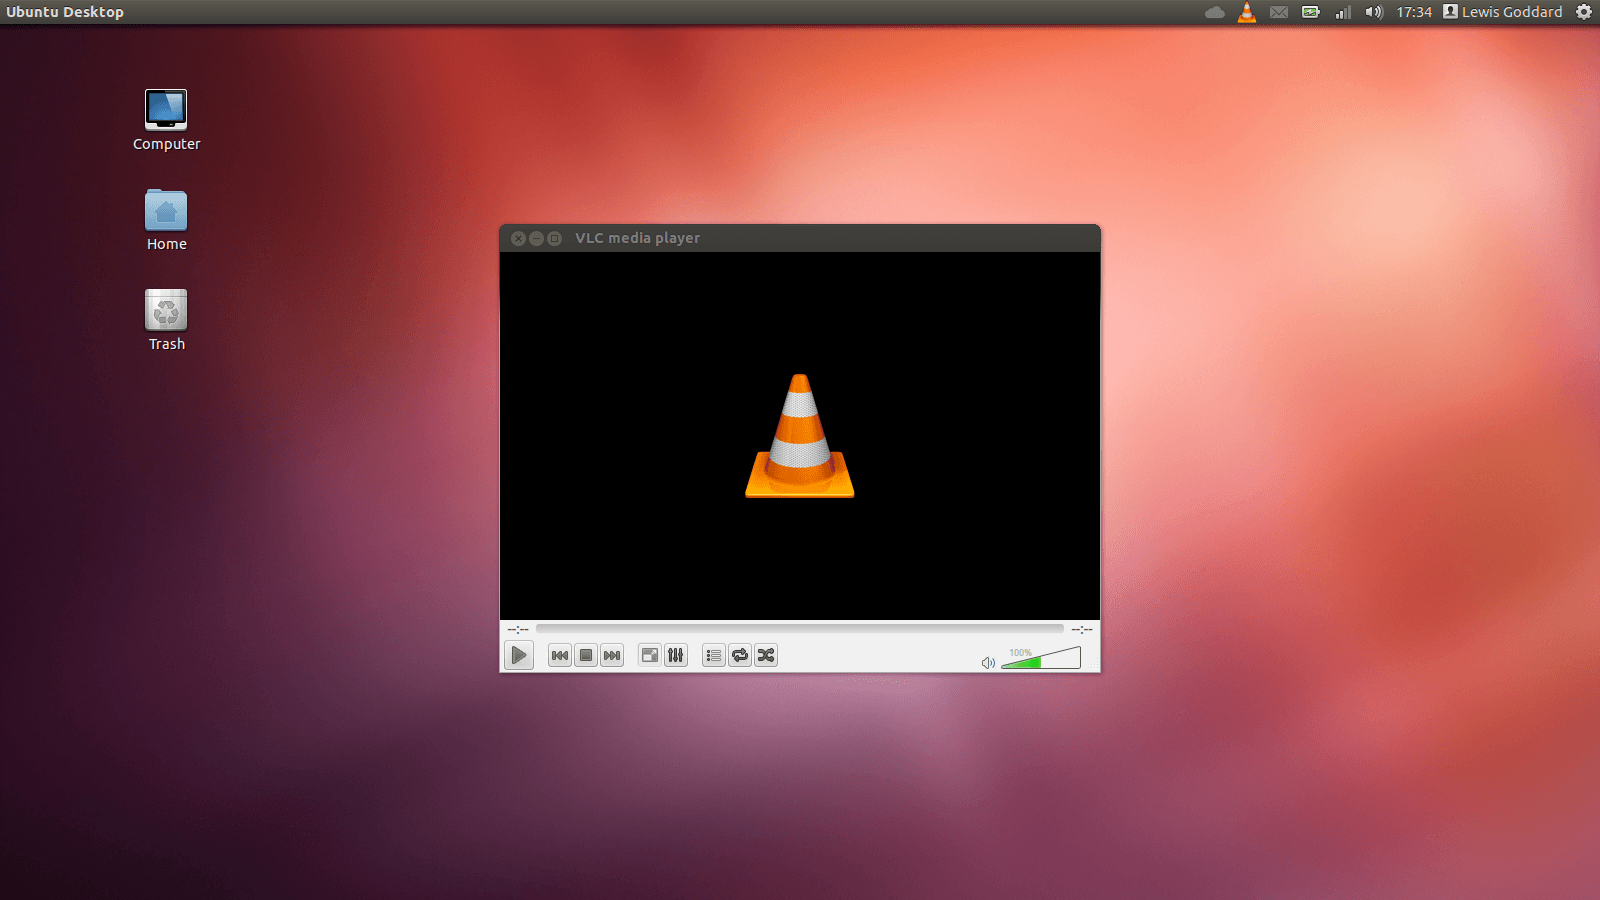 bandeja terciopelo Lugar de la noche How to Play a DVD in Ubuntu | How to ___ Ubuntu